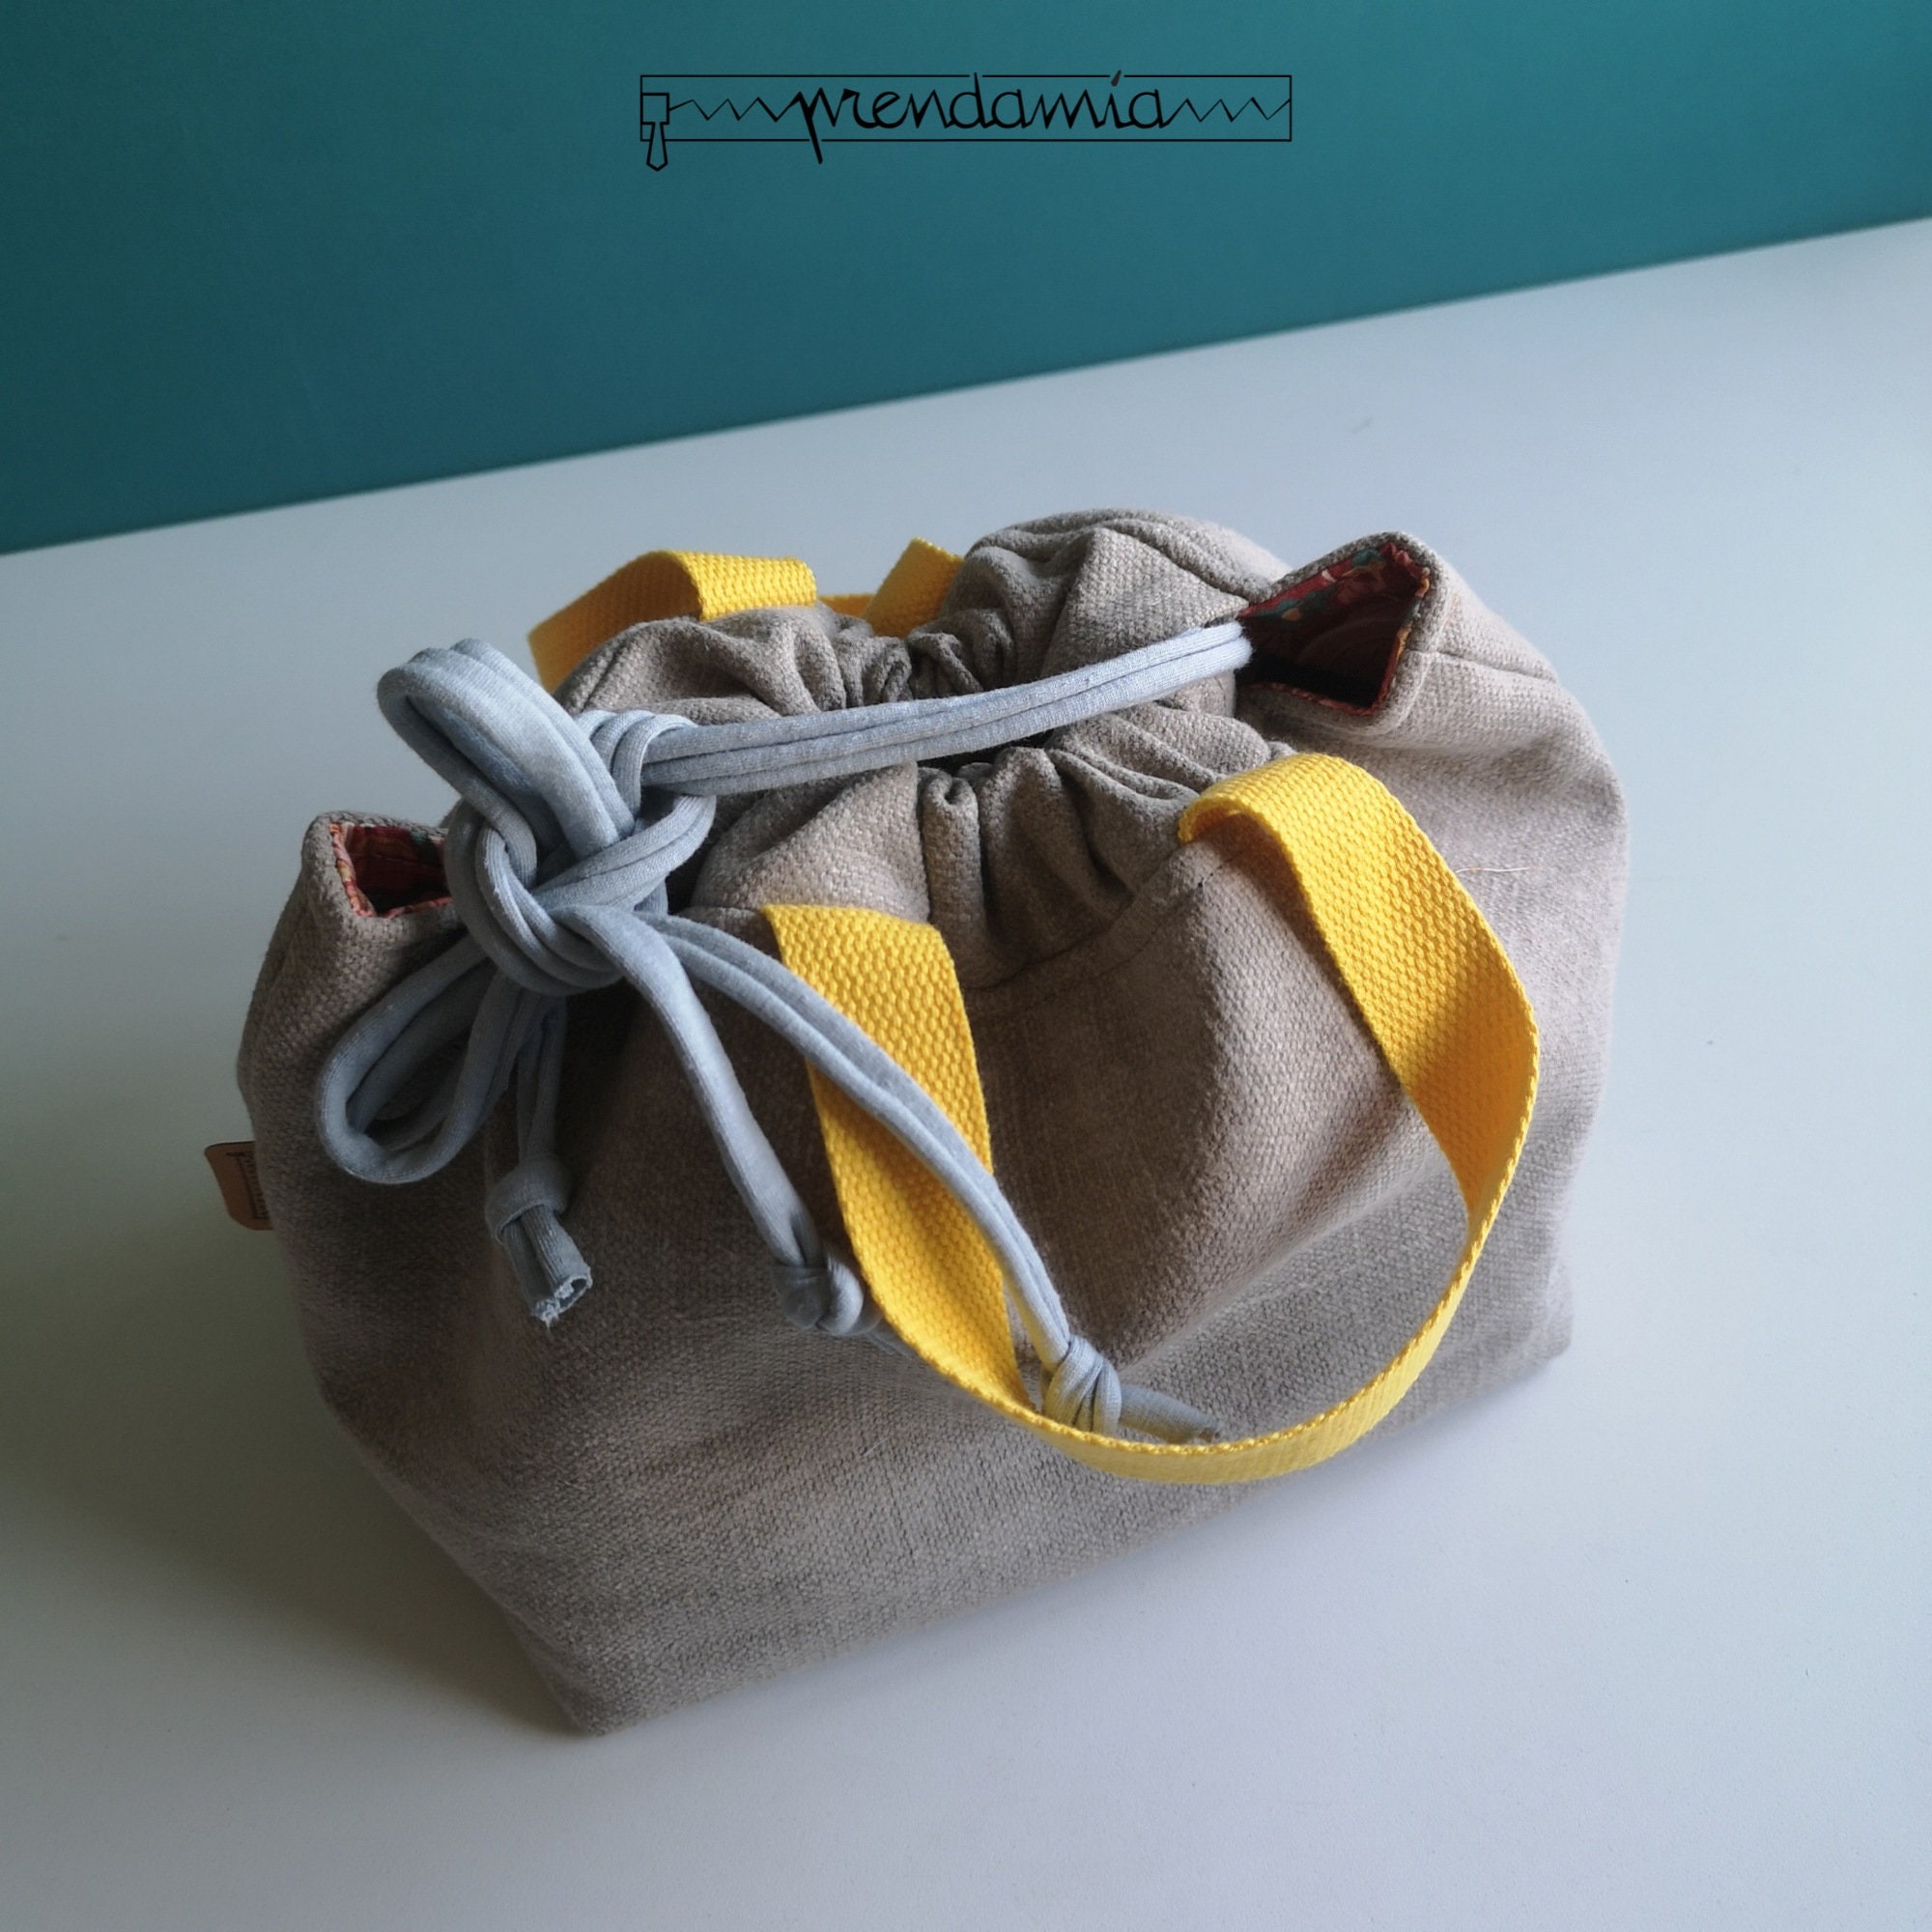 Project Bag, Bag for Knitters, Knitting Bag, Bucket Bag, Organizer